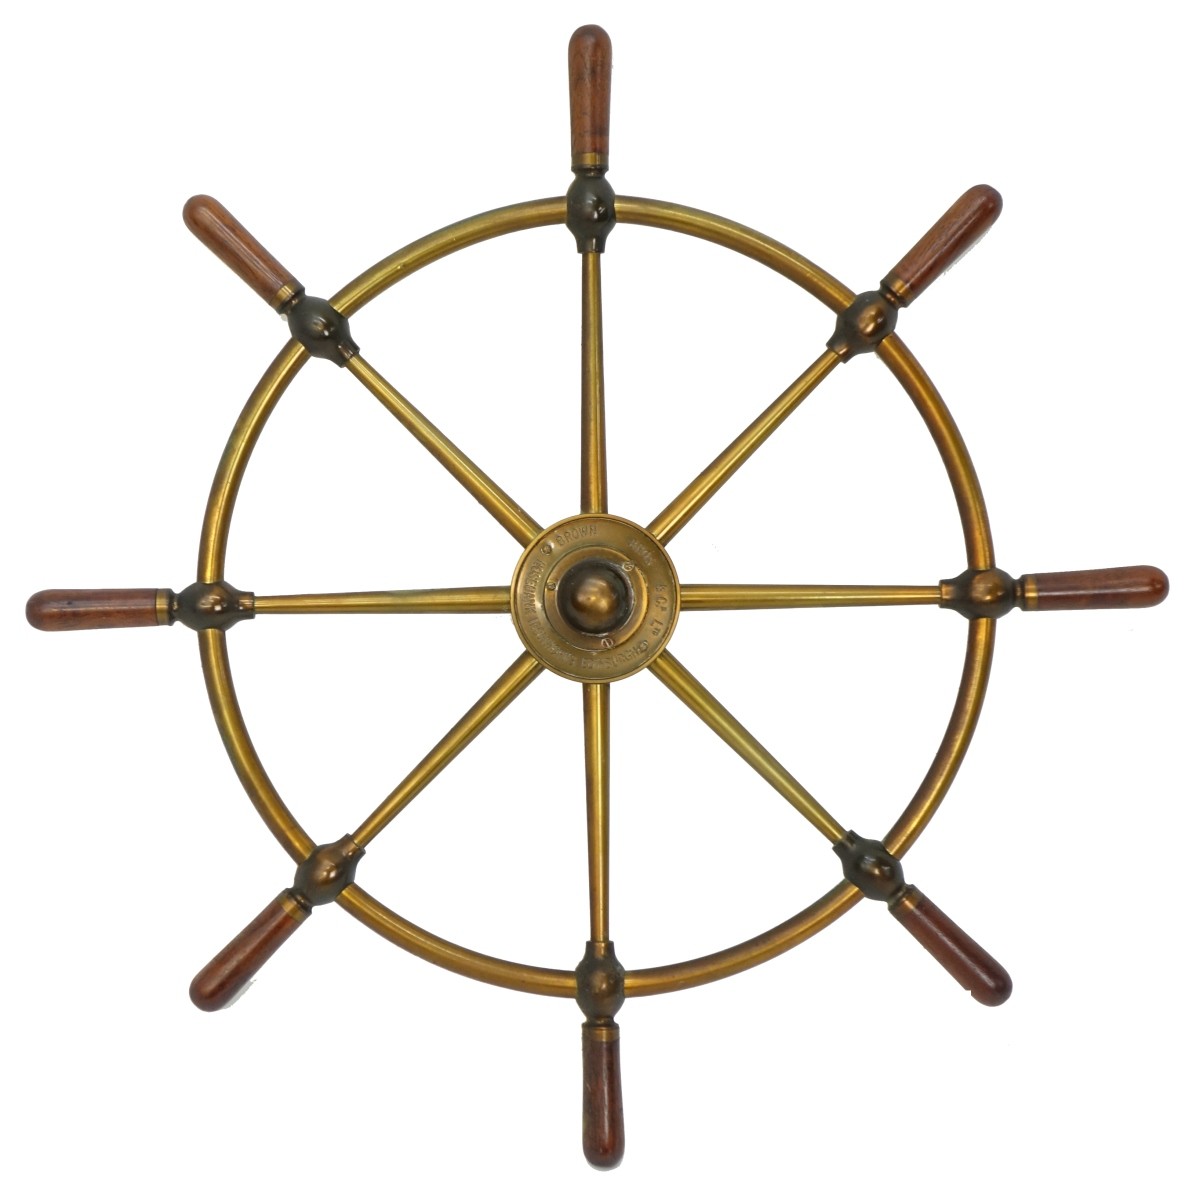 Vintage Brown Bros & Co, Ship's Wheel